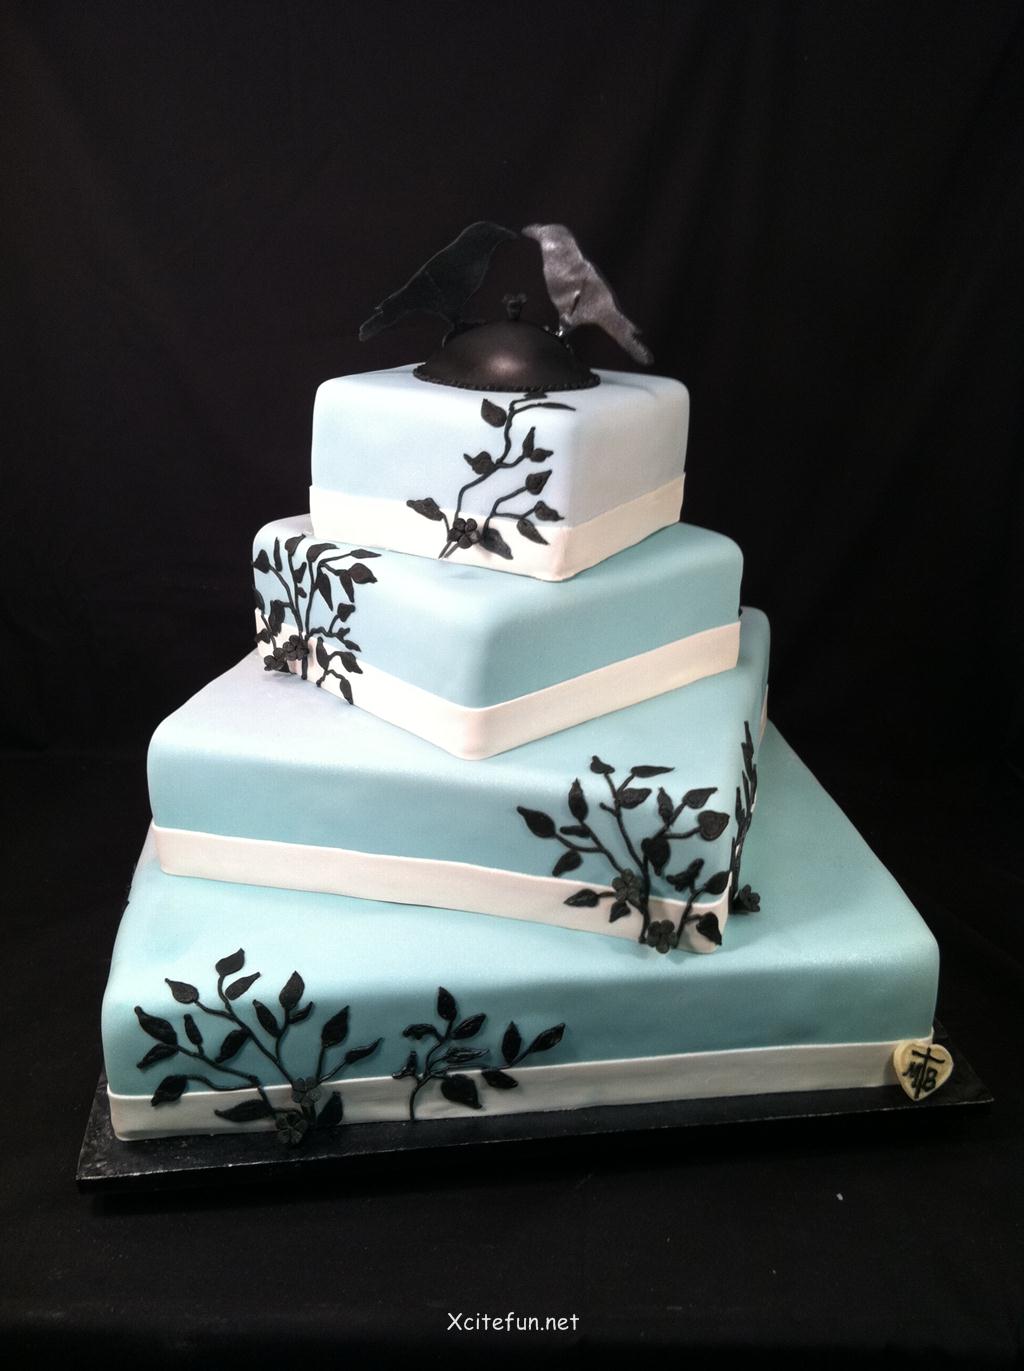  Wedding  Cakes  Decorating  Ideas 